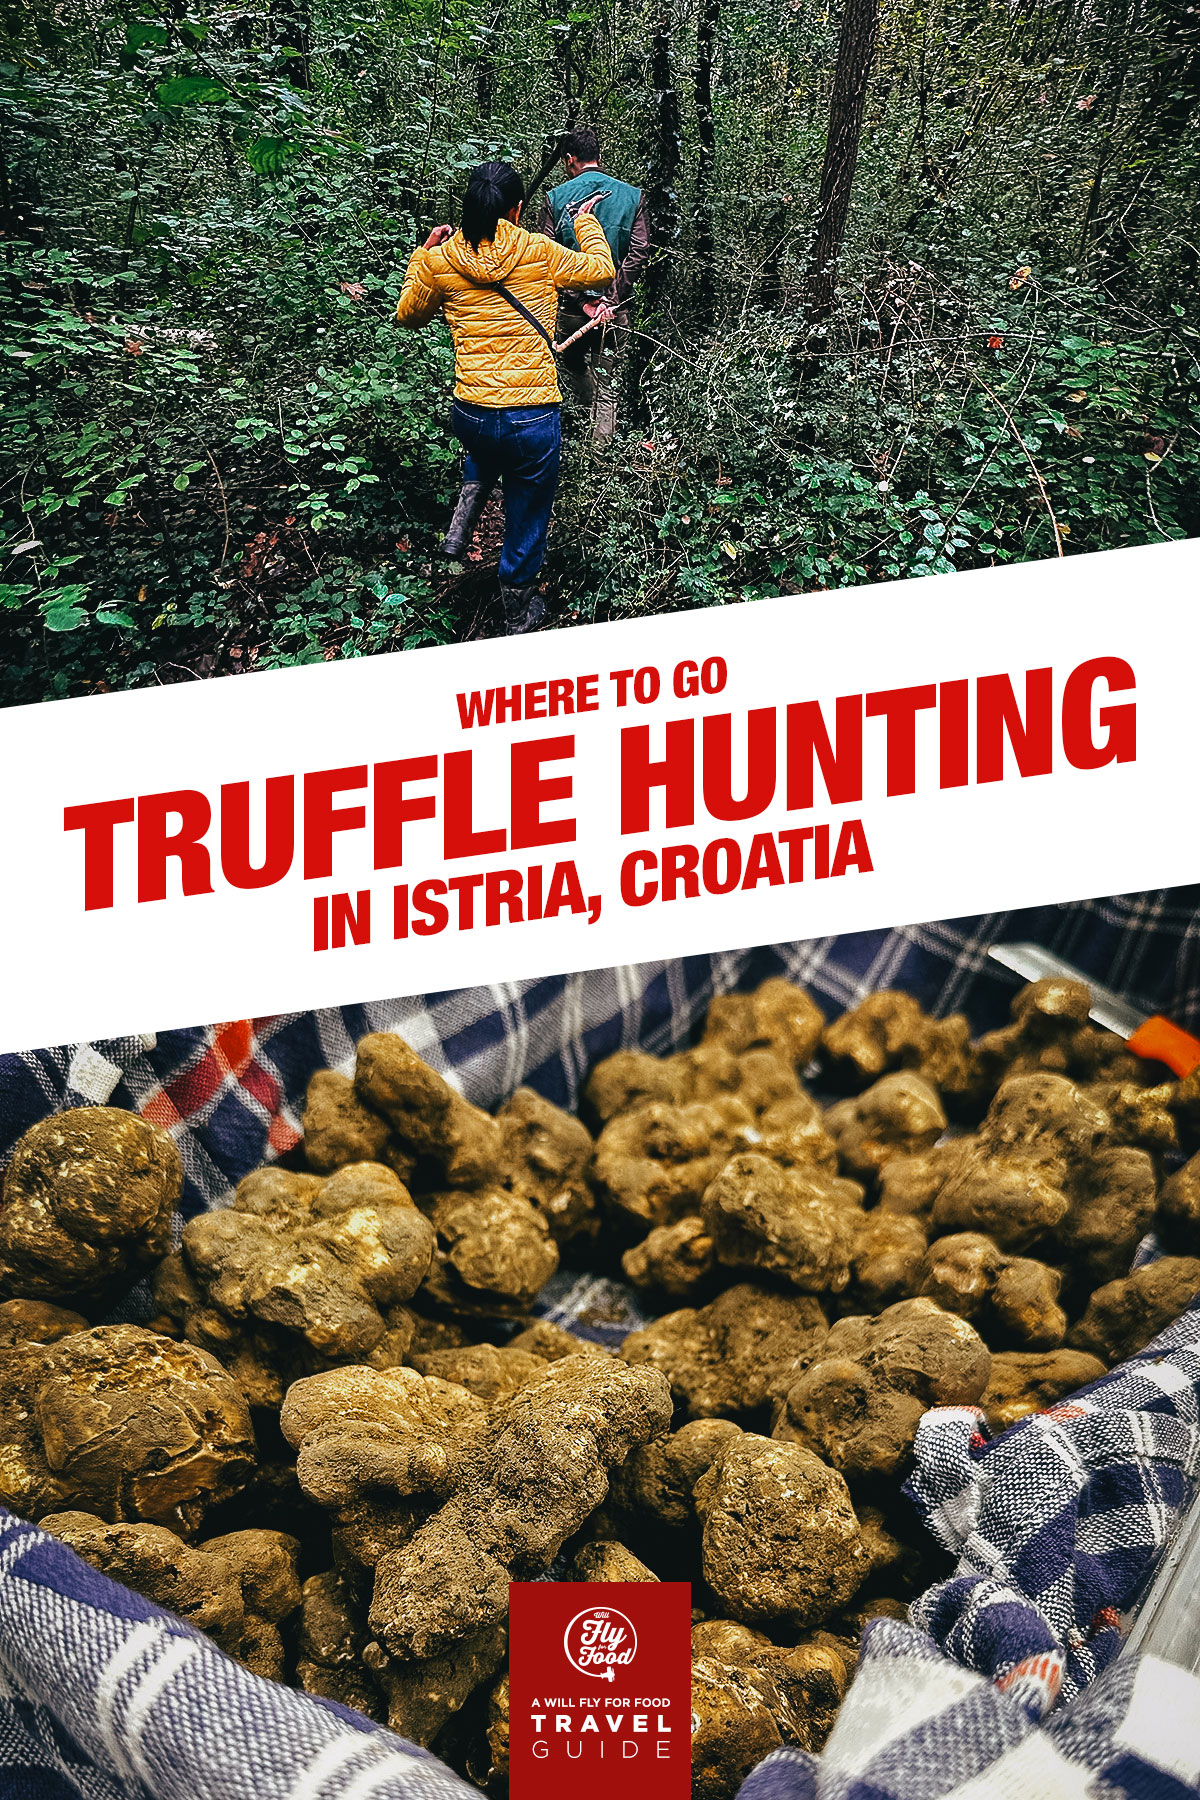 Truffle hunting in Croatia